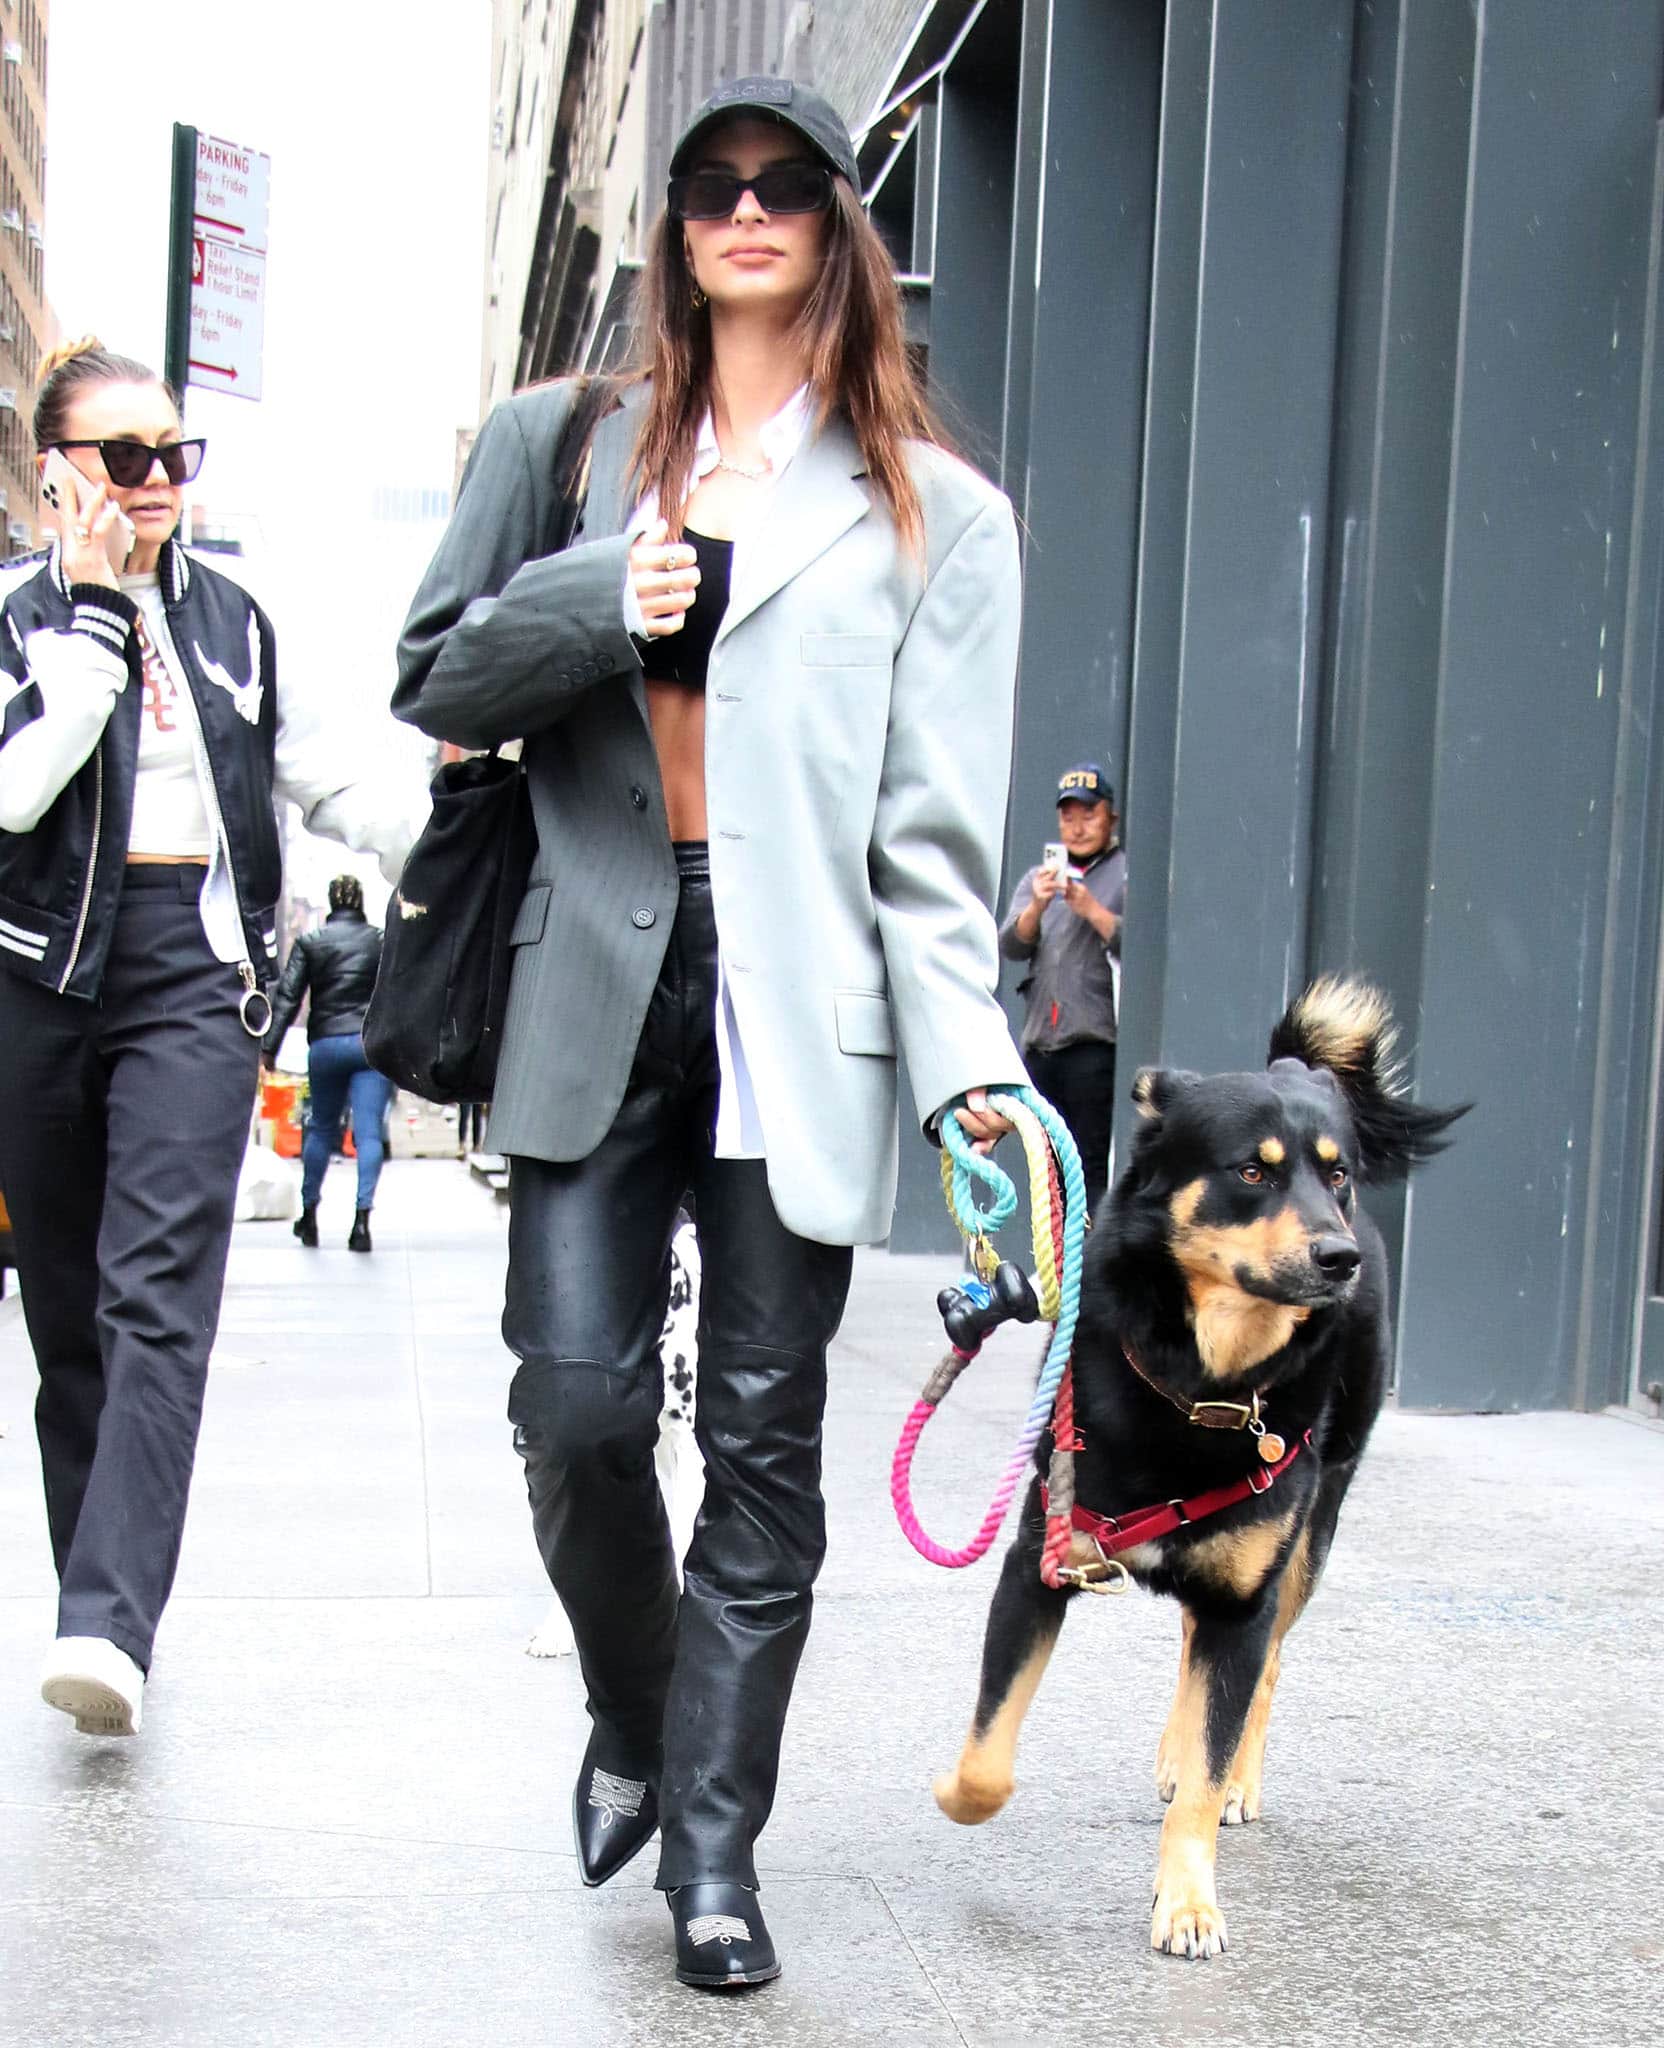 Emily Ratajkowski walks her dog, Colombo, in a black All Fenix bra top, an open white shirt, and a color-block blazer